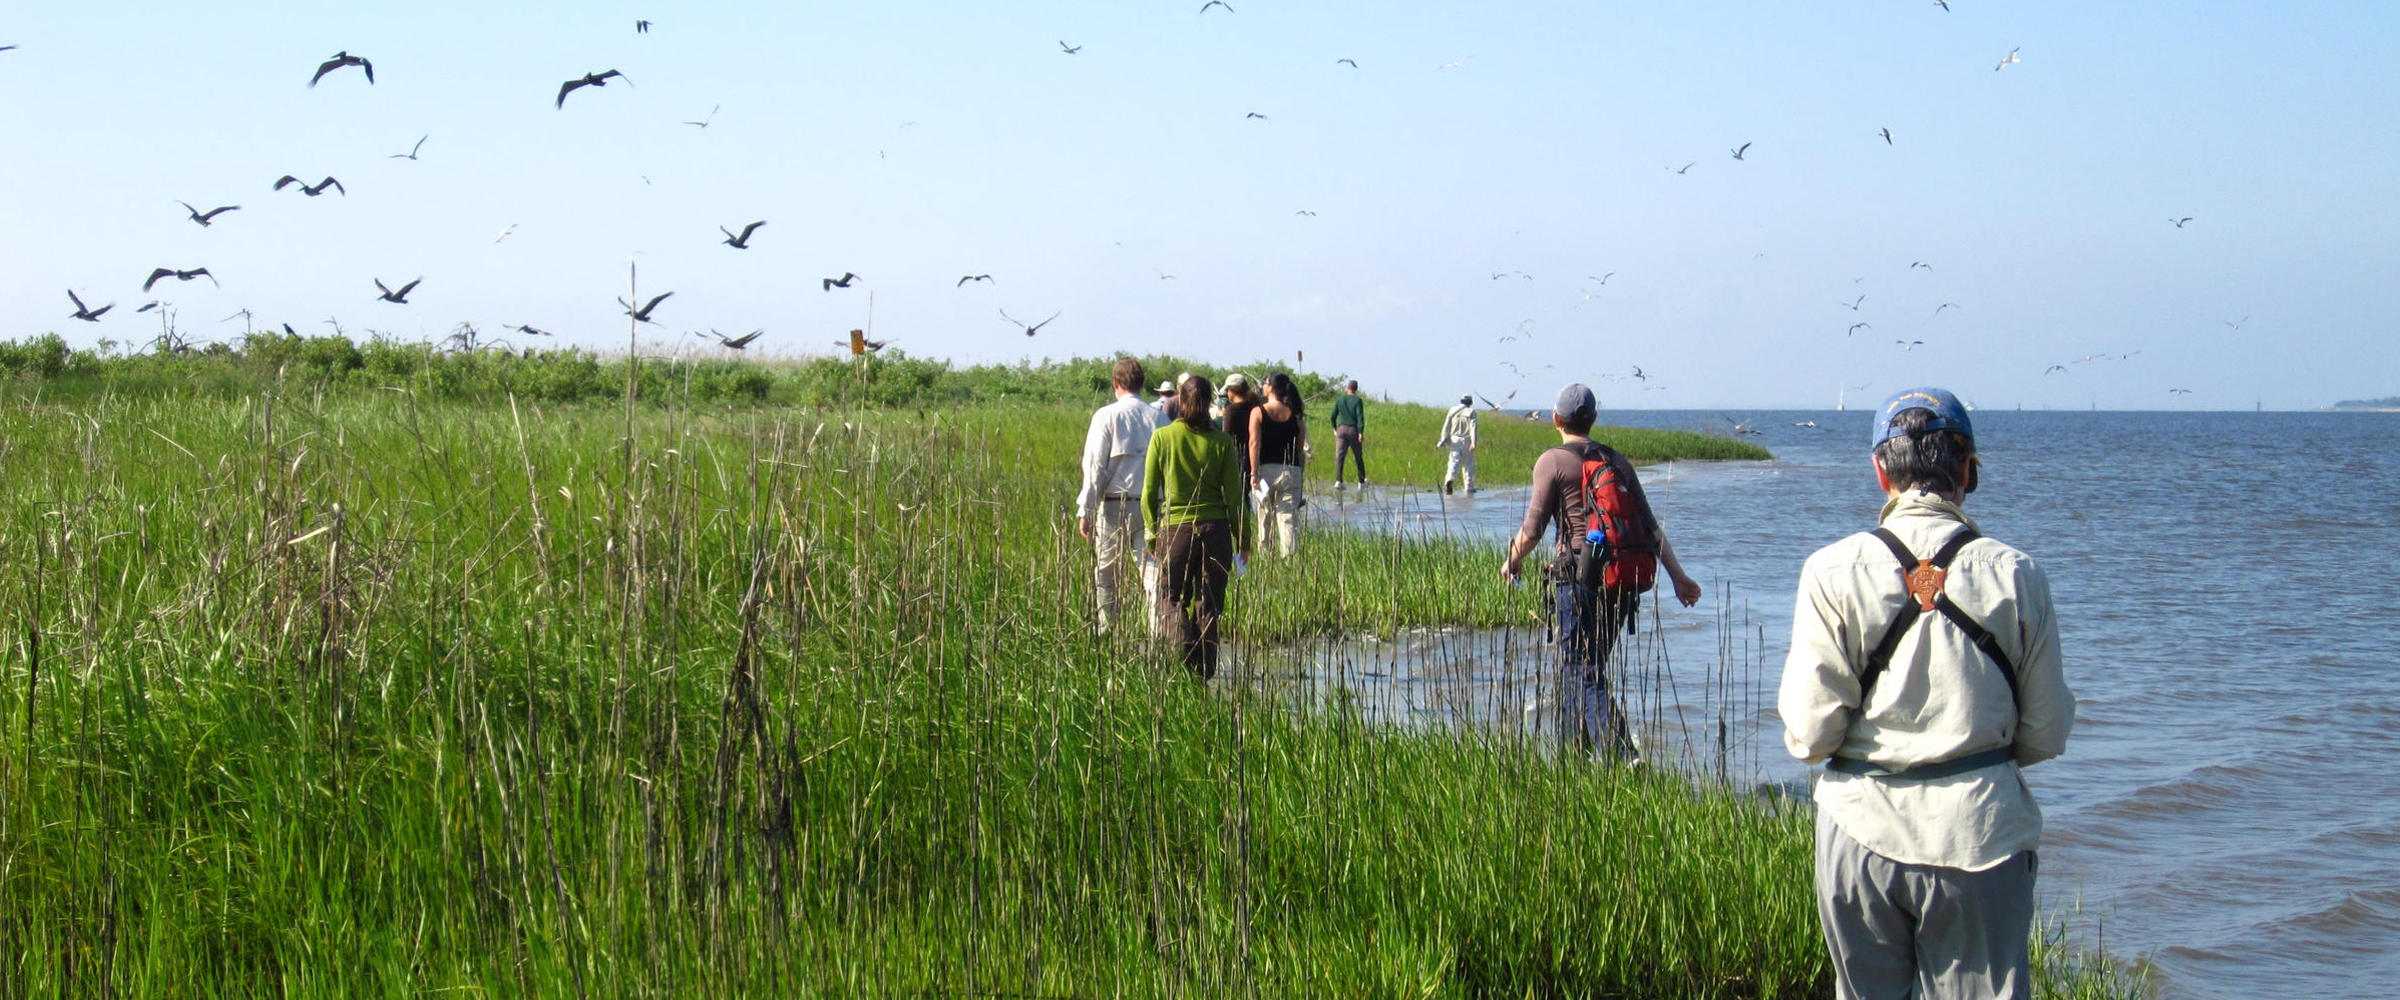 2011 Waterbird Census on North Pelican Island - 